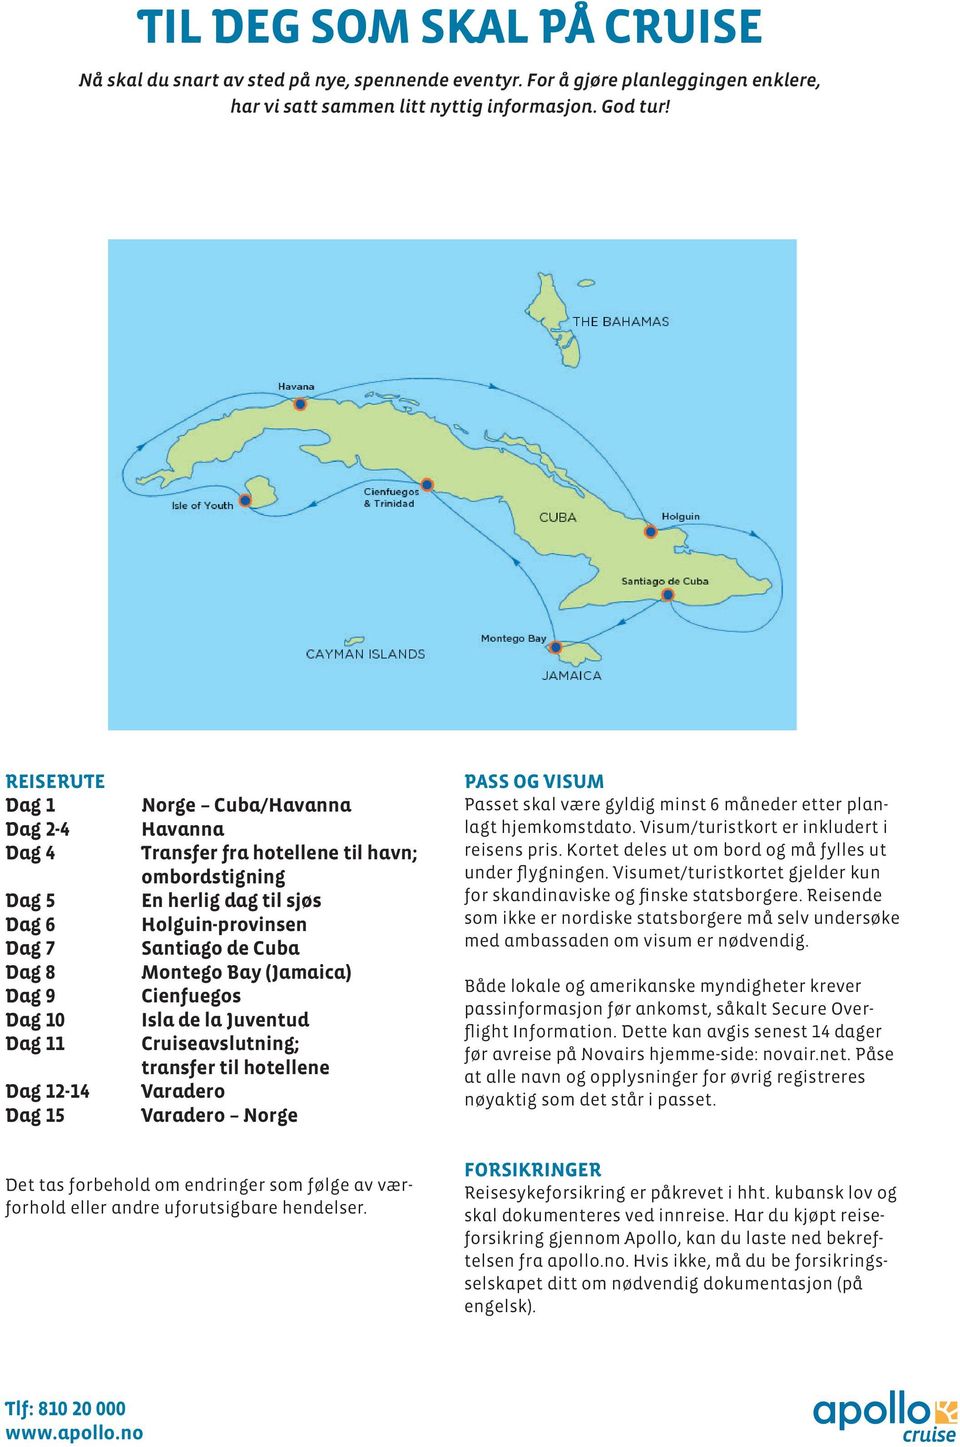 Montego Bay (Jamaica) D ag 9 Cienfuegos D ag 10 Isla de la Juventud D ag 11 Cruiseavslutning; transfer til hotellene D ag 12-14 Varadero D ag 15 Varadero Norge Det tas forbehold om endringer som